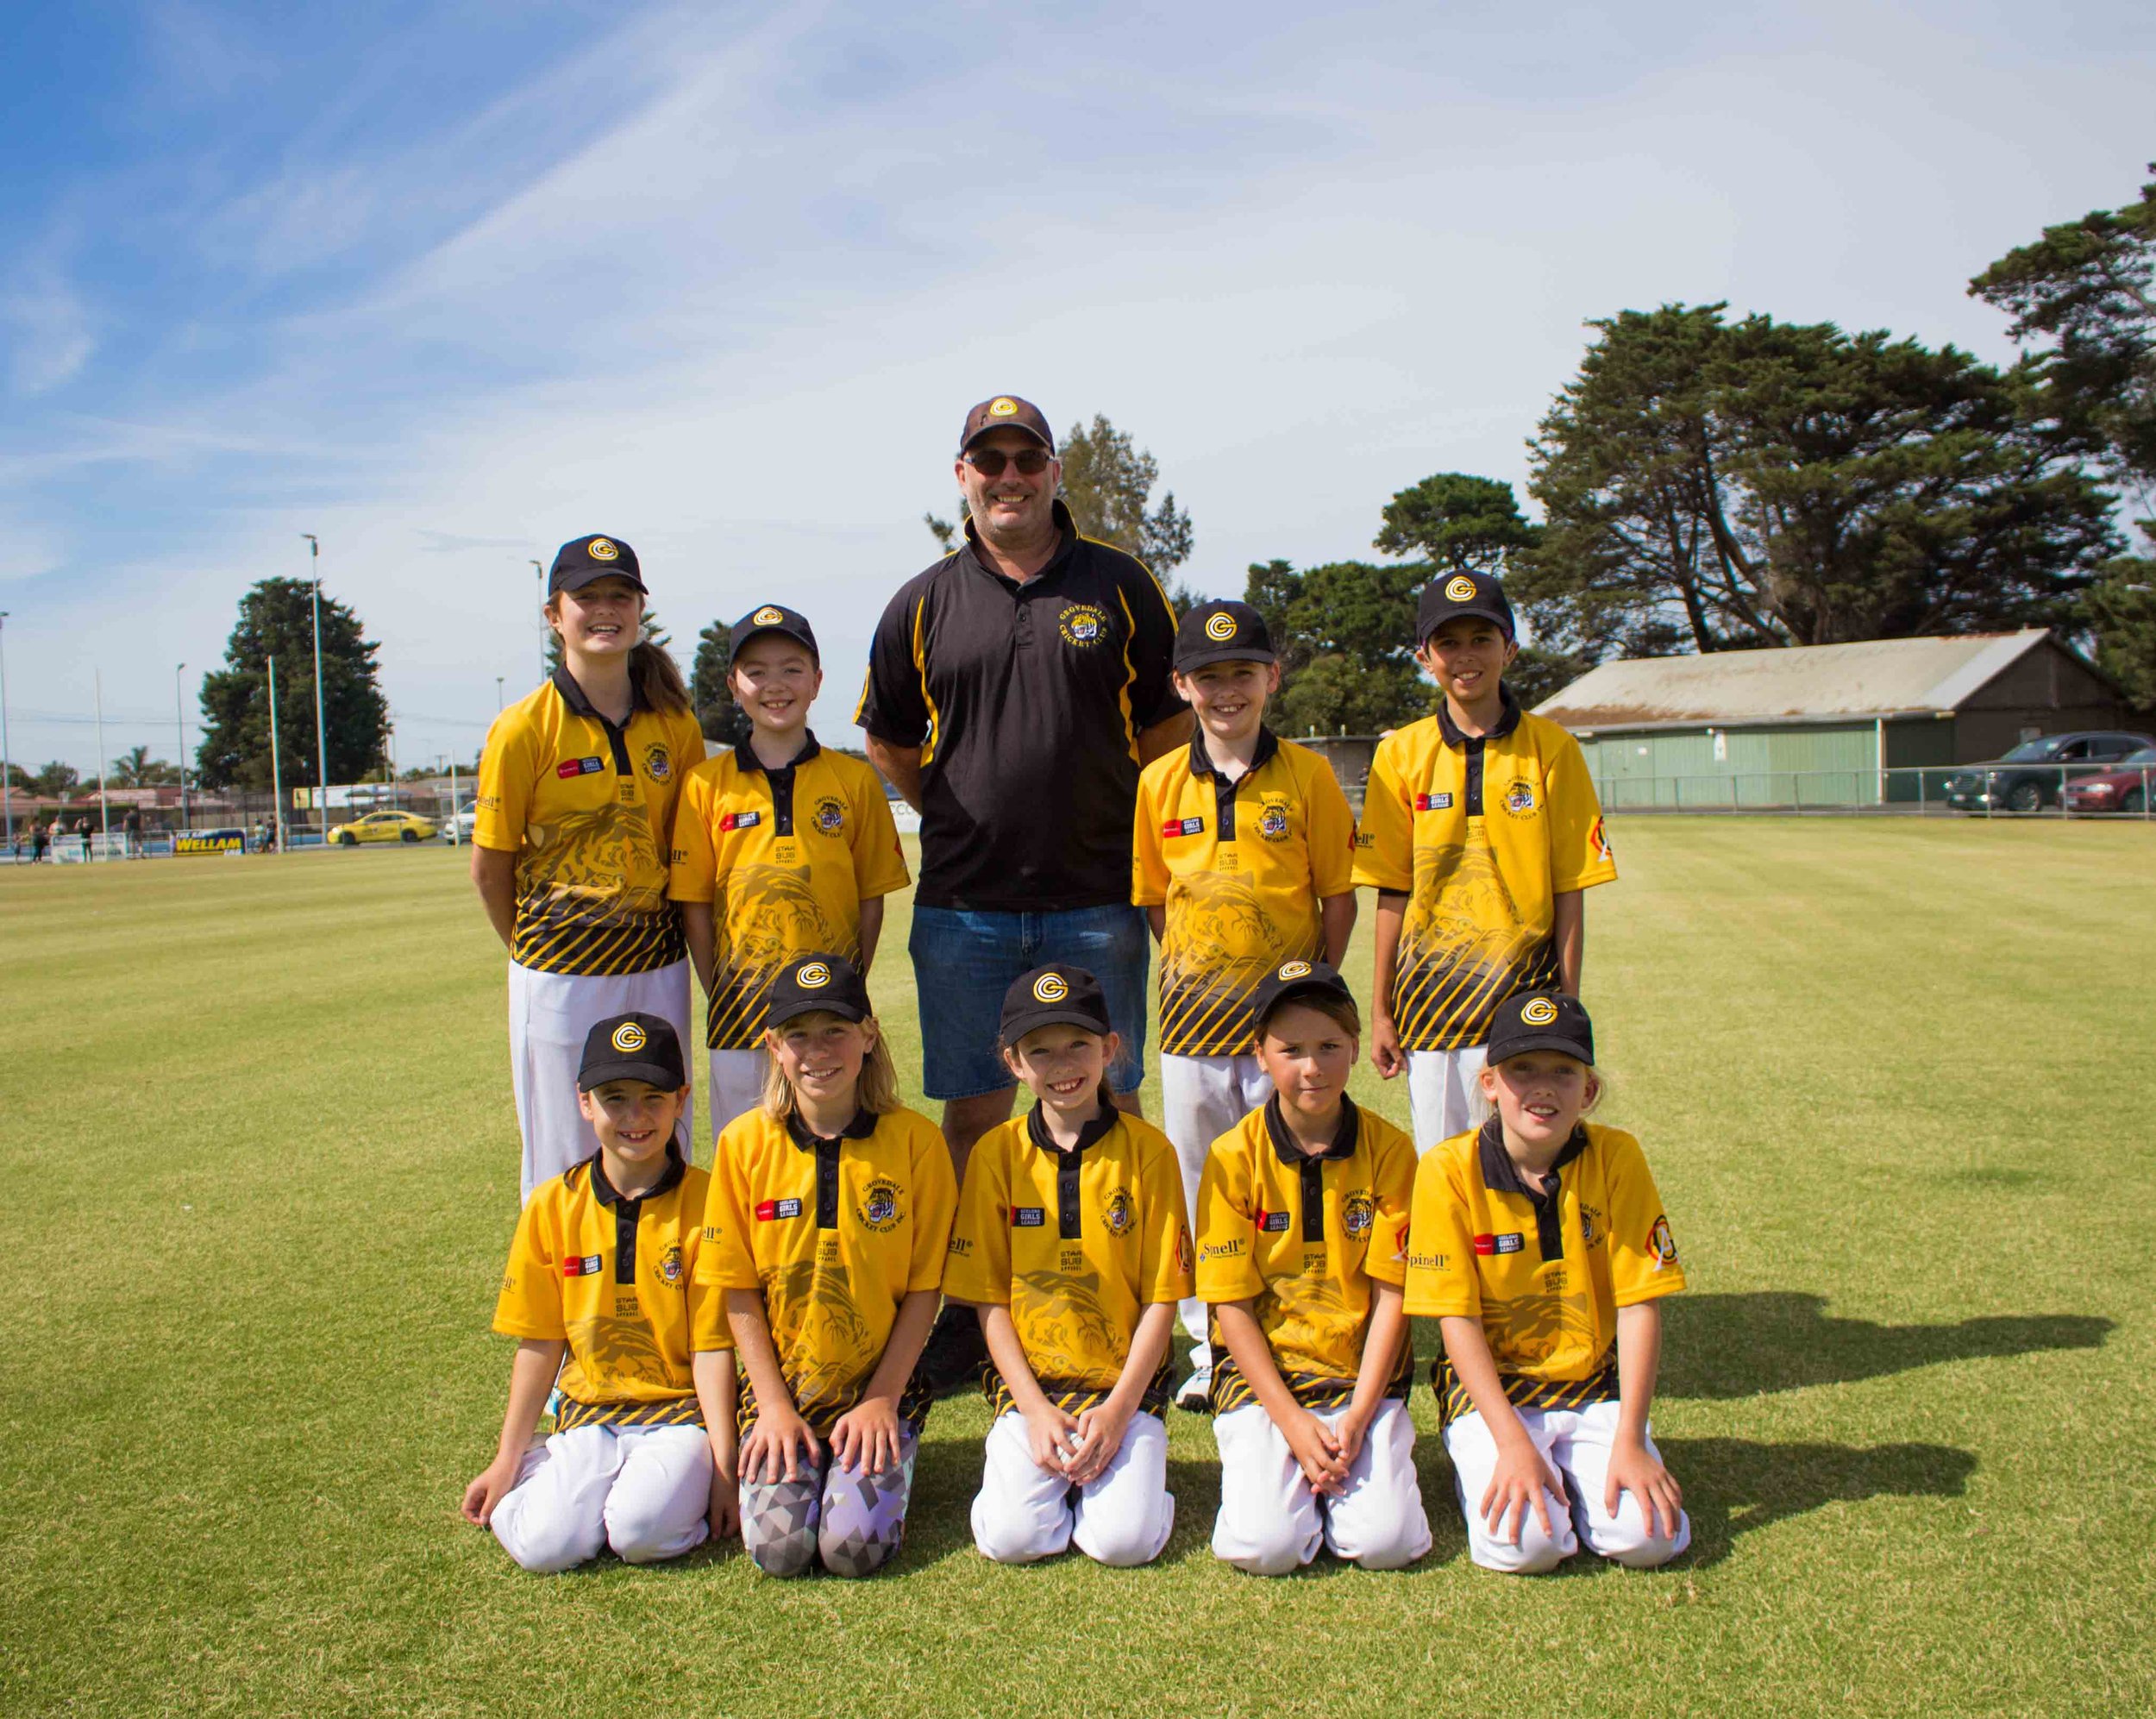 Girls local cricket team